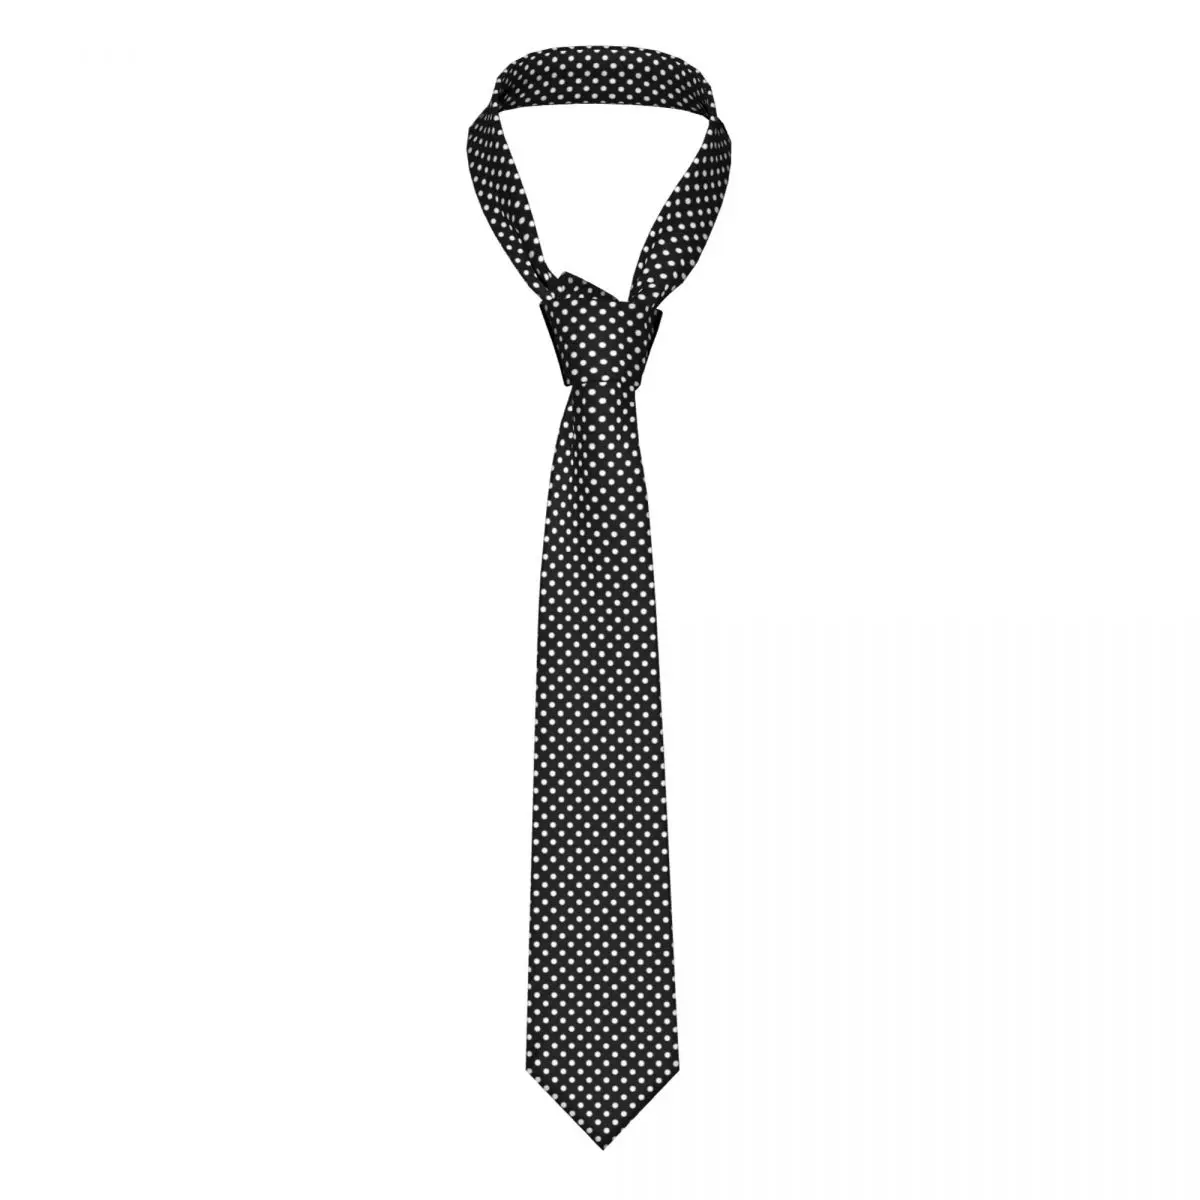 

Black White Polka Dot Tie Classic Spots Print Office 8CM Neck Ties For Man Gift Shirt Vintage Cravat